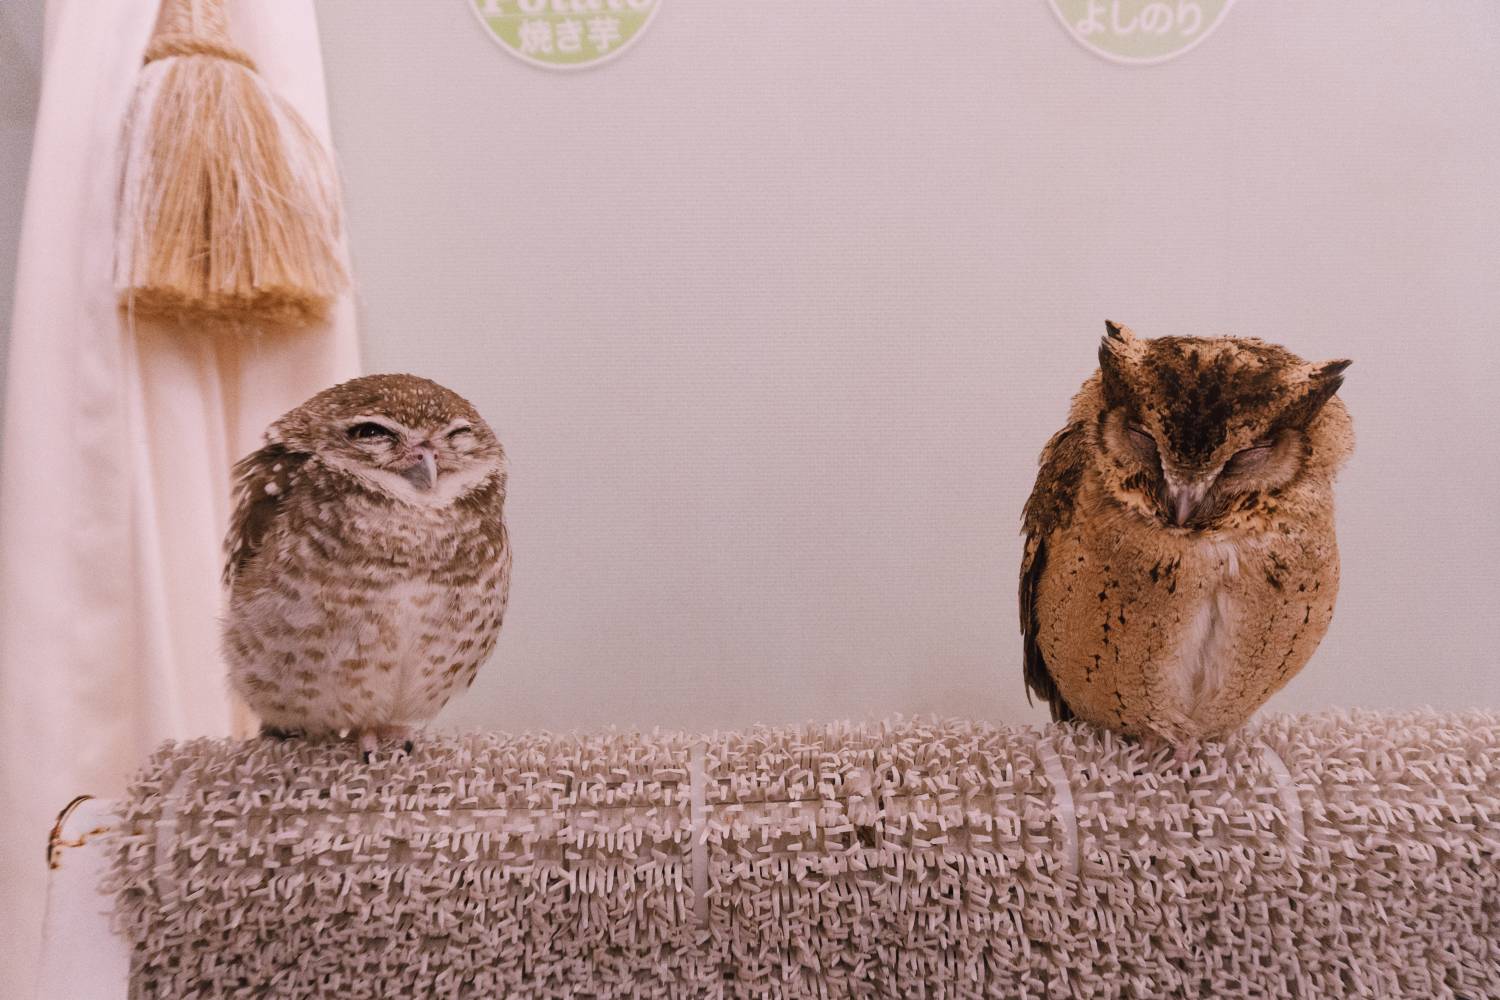 The Most Unique & Best Owl Cafe In Tokyo, Japan - Tokyo Travel Blog